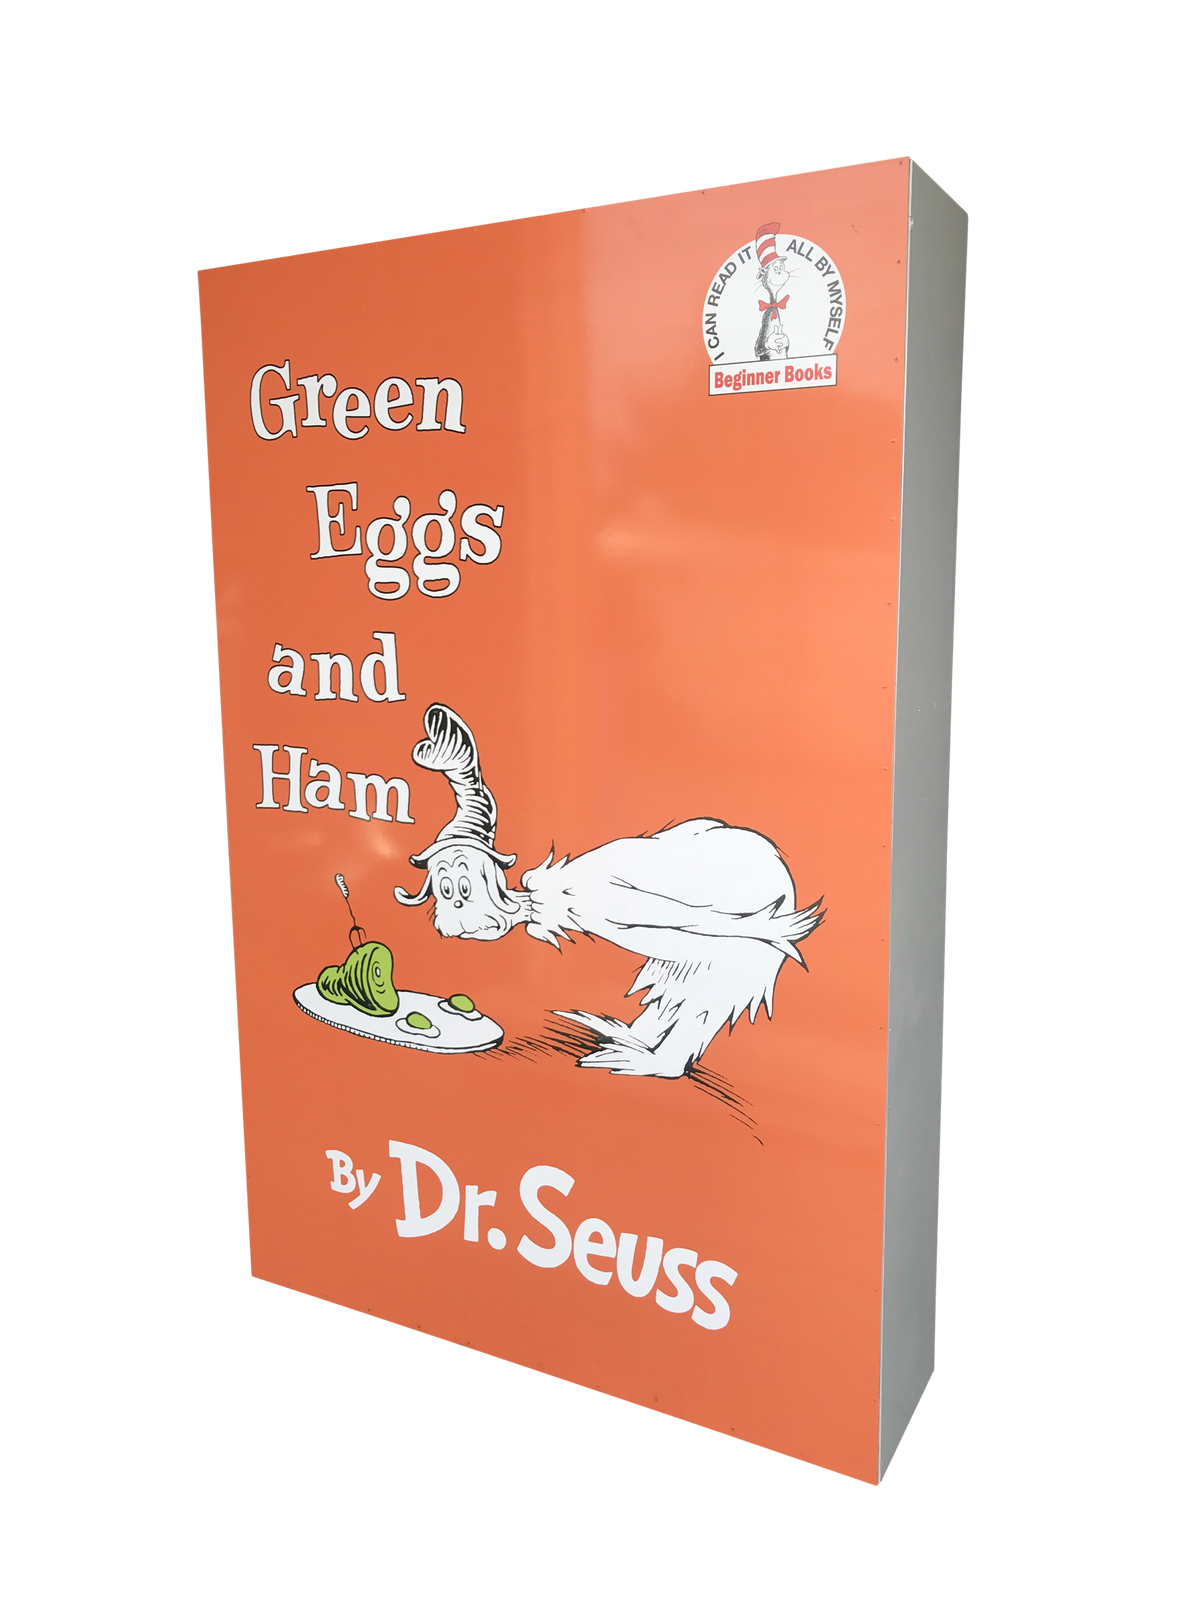 Green Eggs & Ham Book